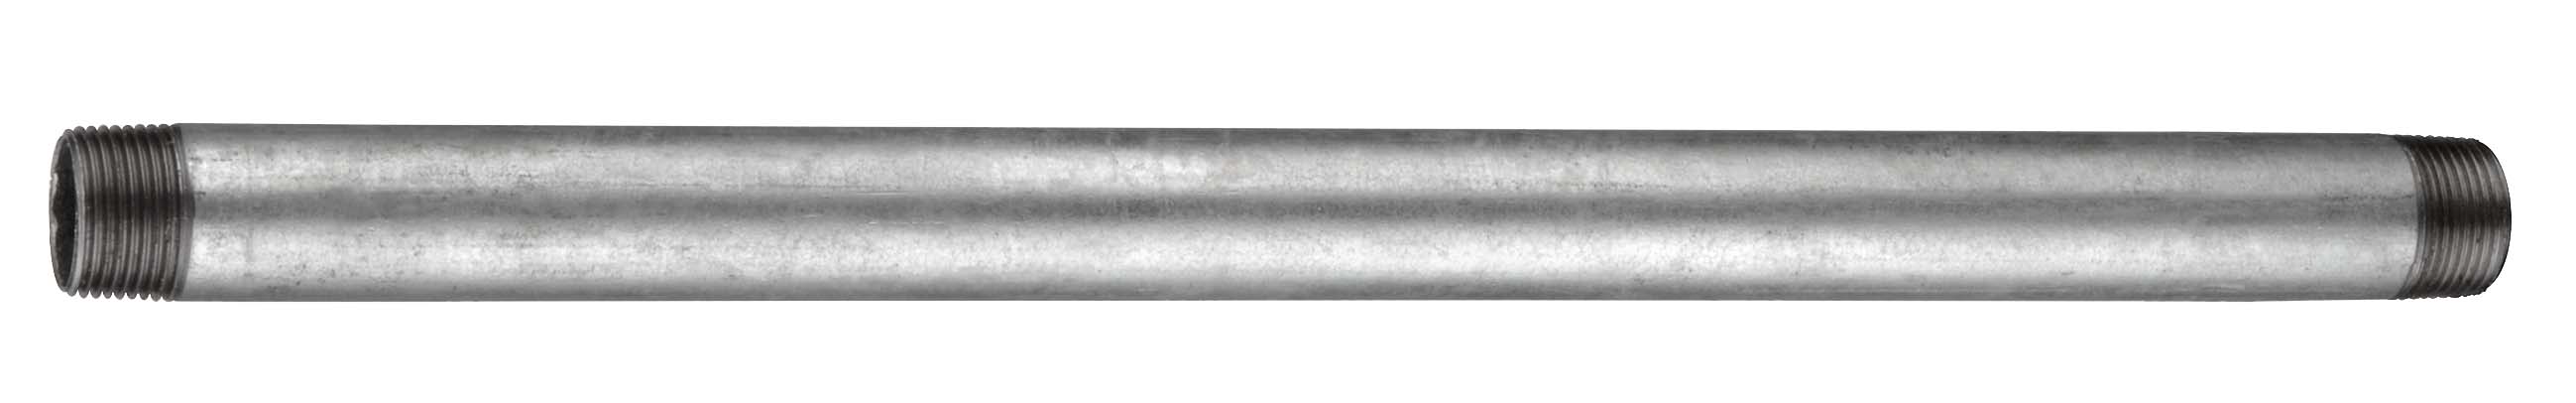 CONMETALL Rohrnippel verzinkt 3/8x2000 mm 